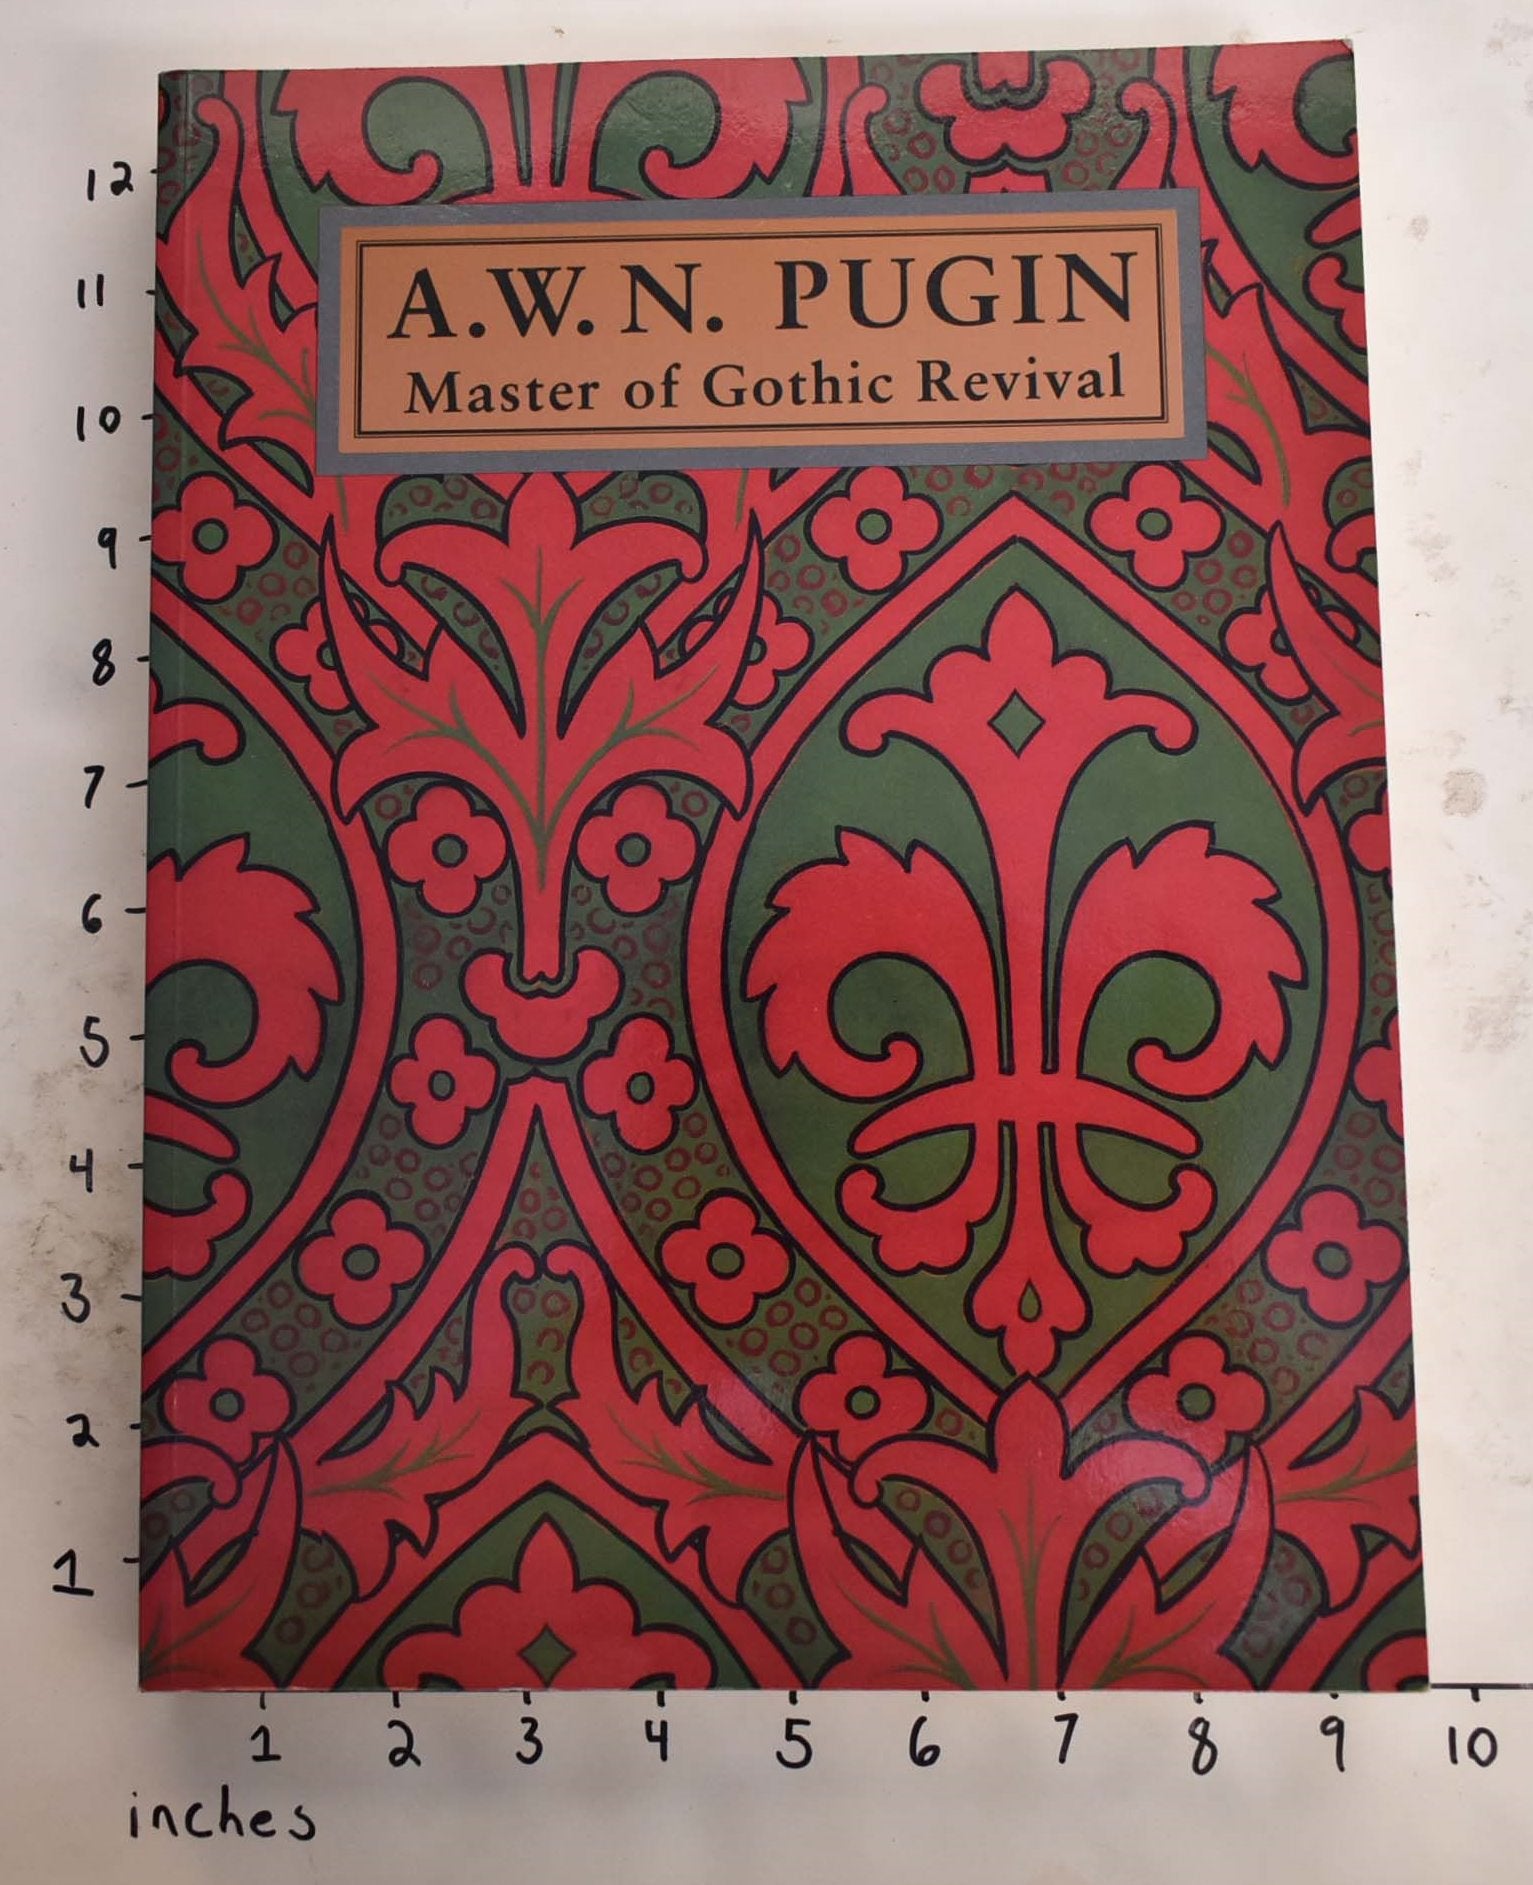 Atterbury, Paul (editor) - A.W. N. Pugin: Master of Gothic Revival